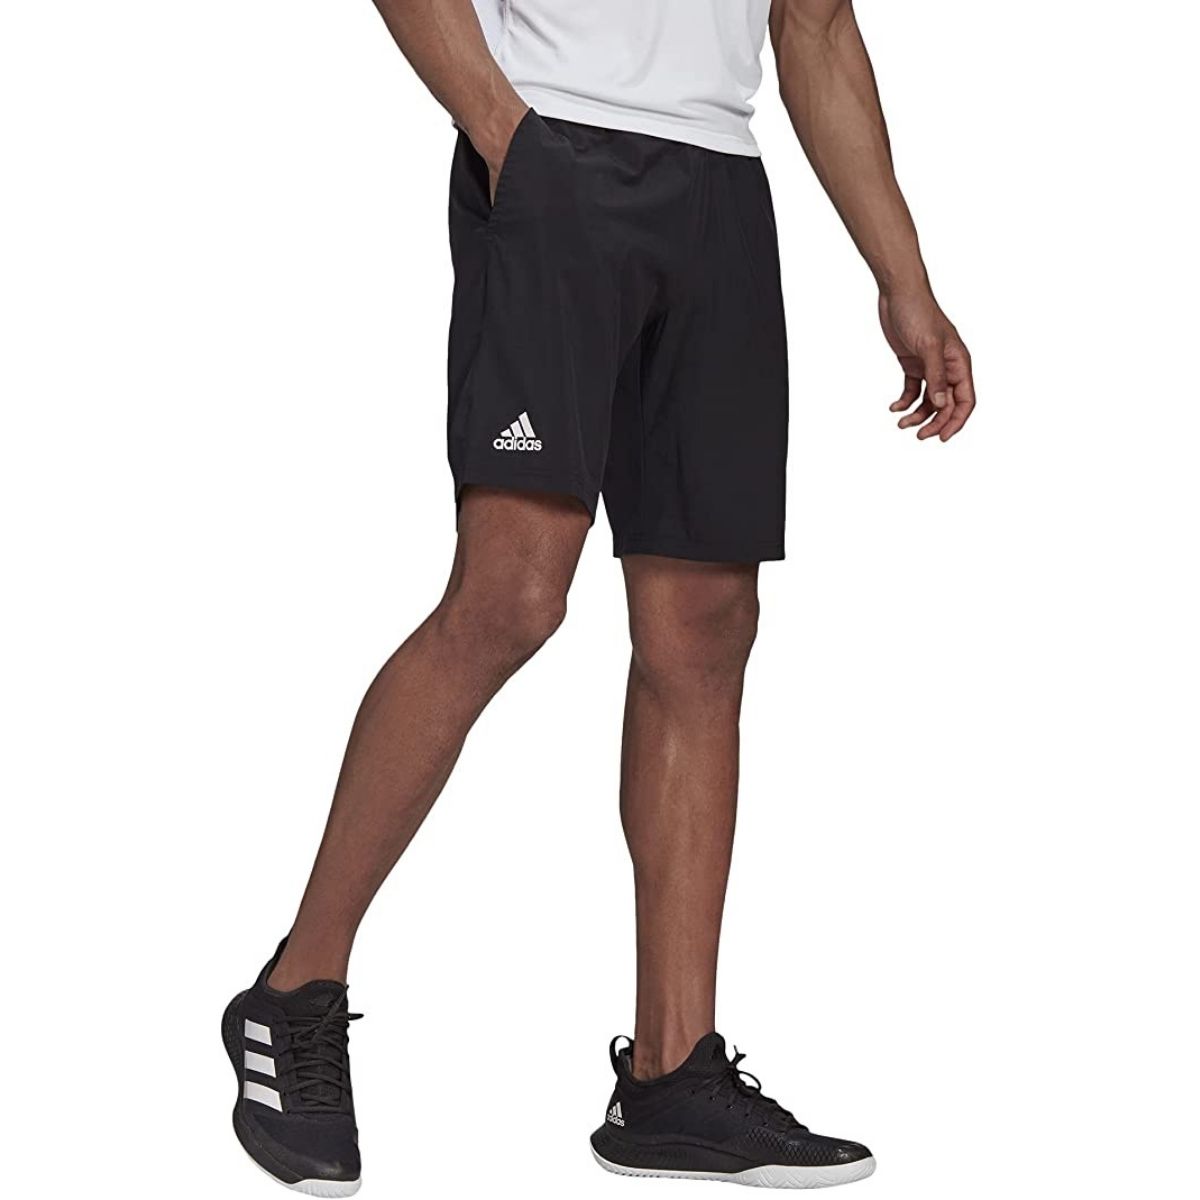 The Best Tennis Shorts Options: Adidas Men's Standard Tennis Shorts